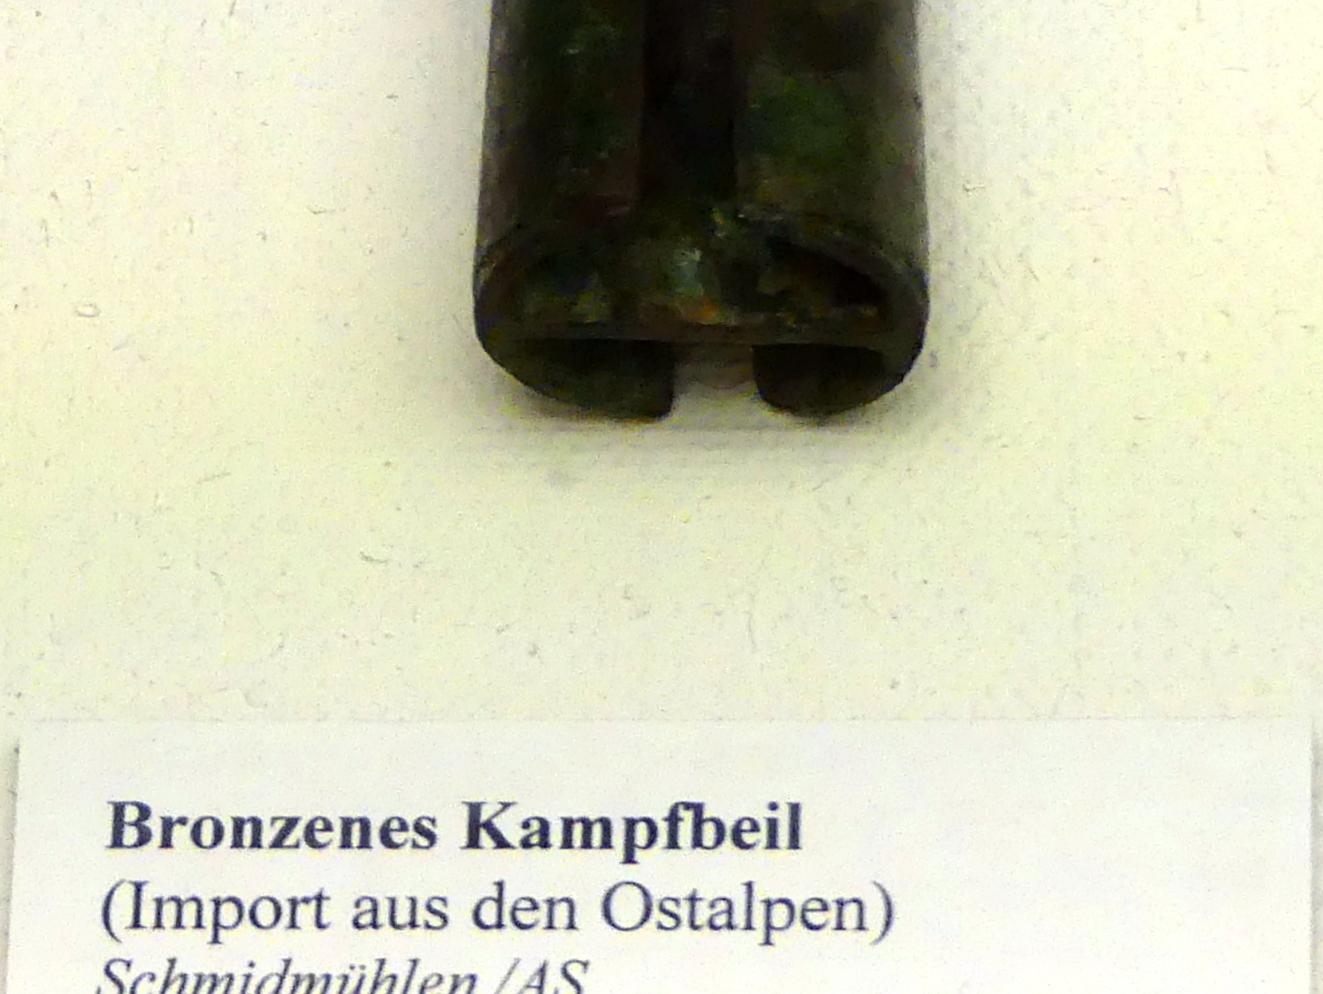 Bronzenes Kampfbeil, Hallstattzeit, 700 - 200 v. Chr., Bild 2/2